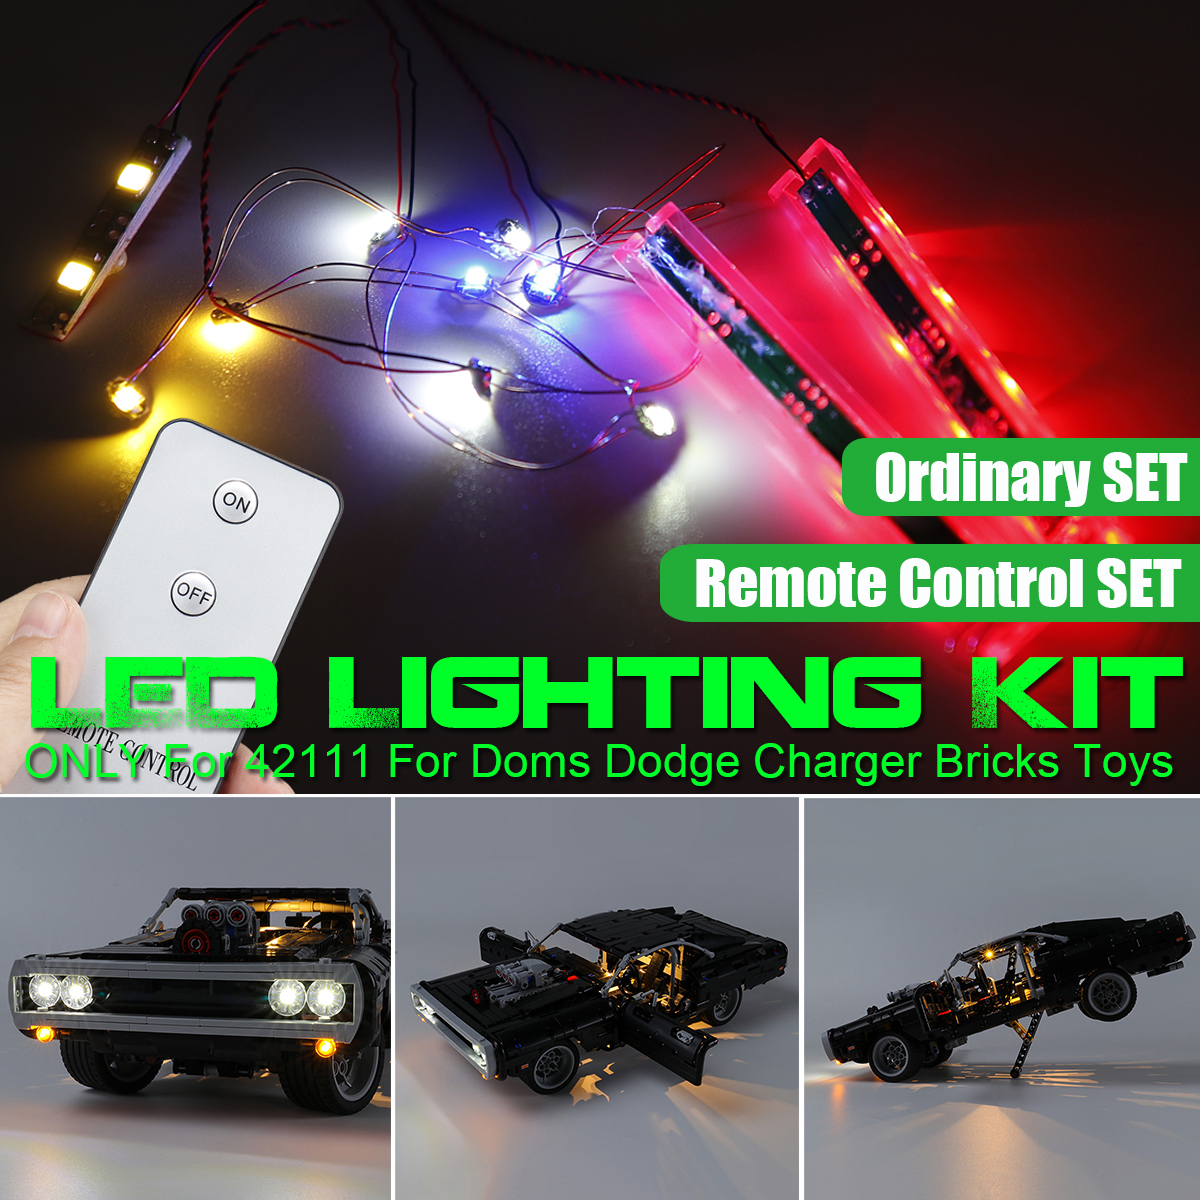 LED-Light-Lighting-Kit-Only-for-LEGO-42111-for-Doms-Dodge-Charger-Car-Bricks-Toy-1721042-1